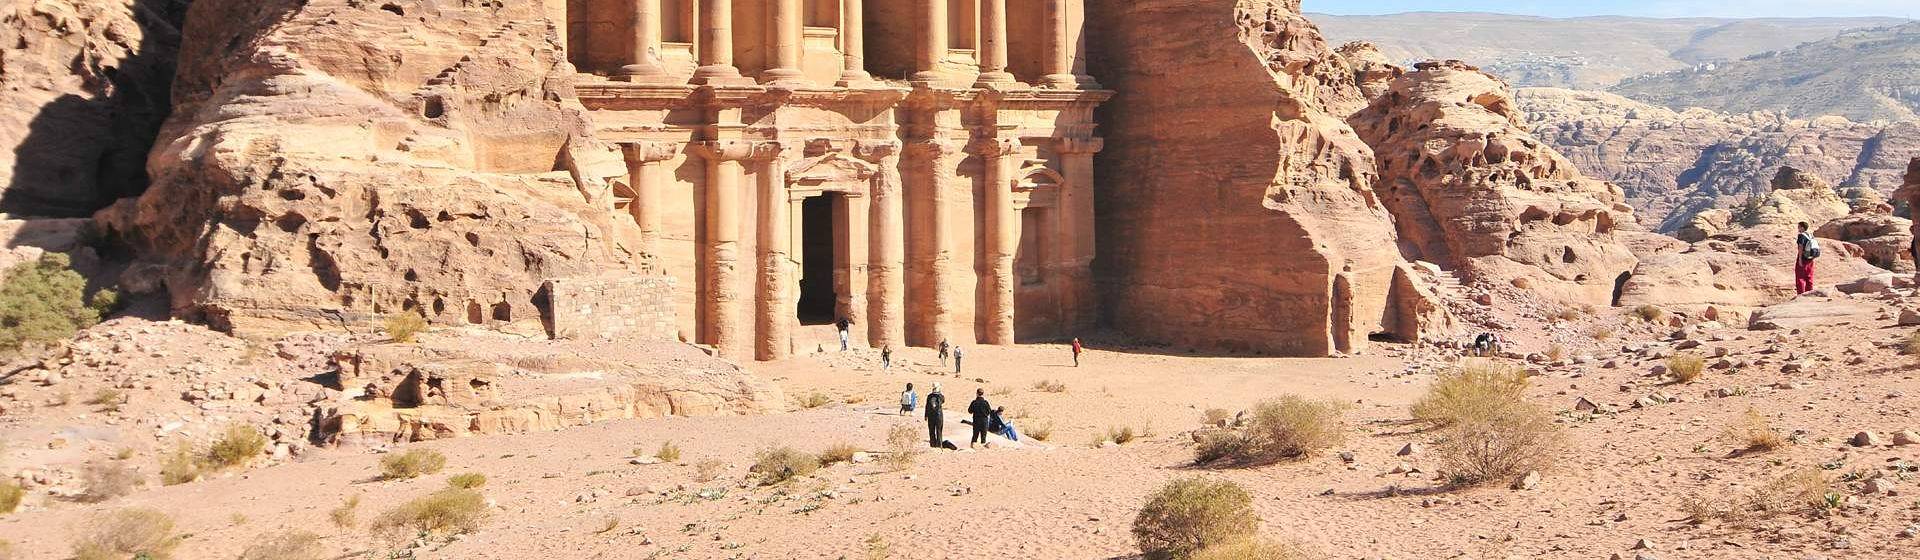 Holidays to Petra Image